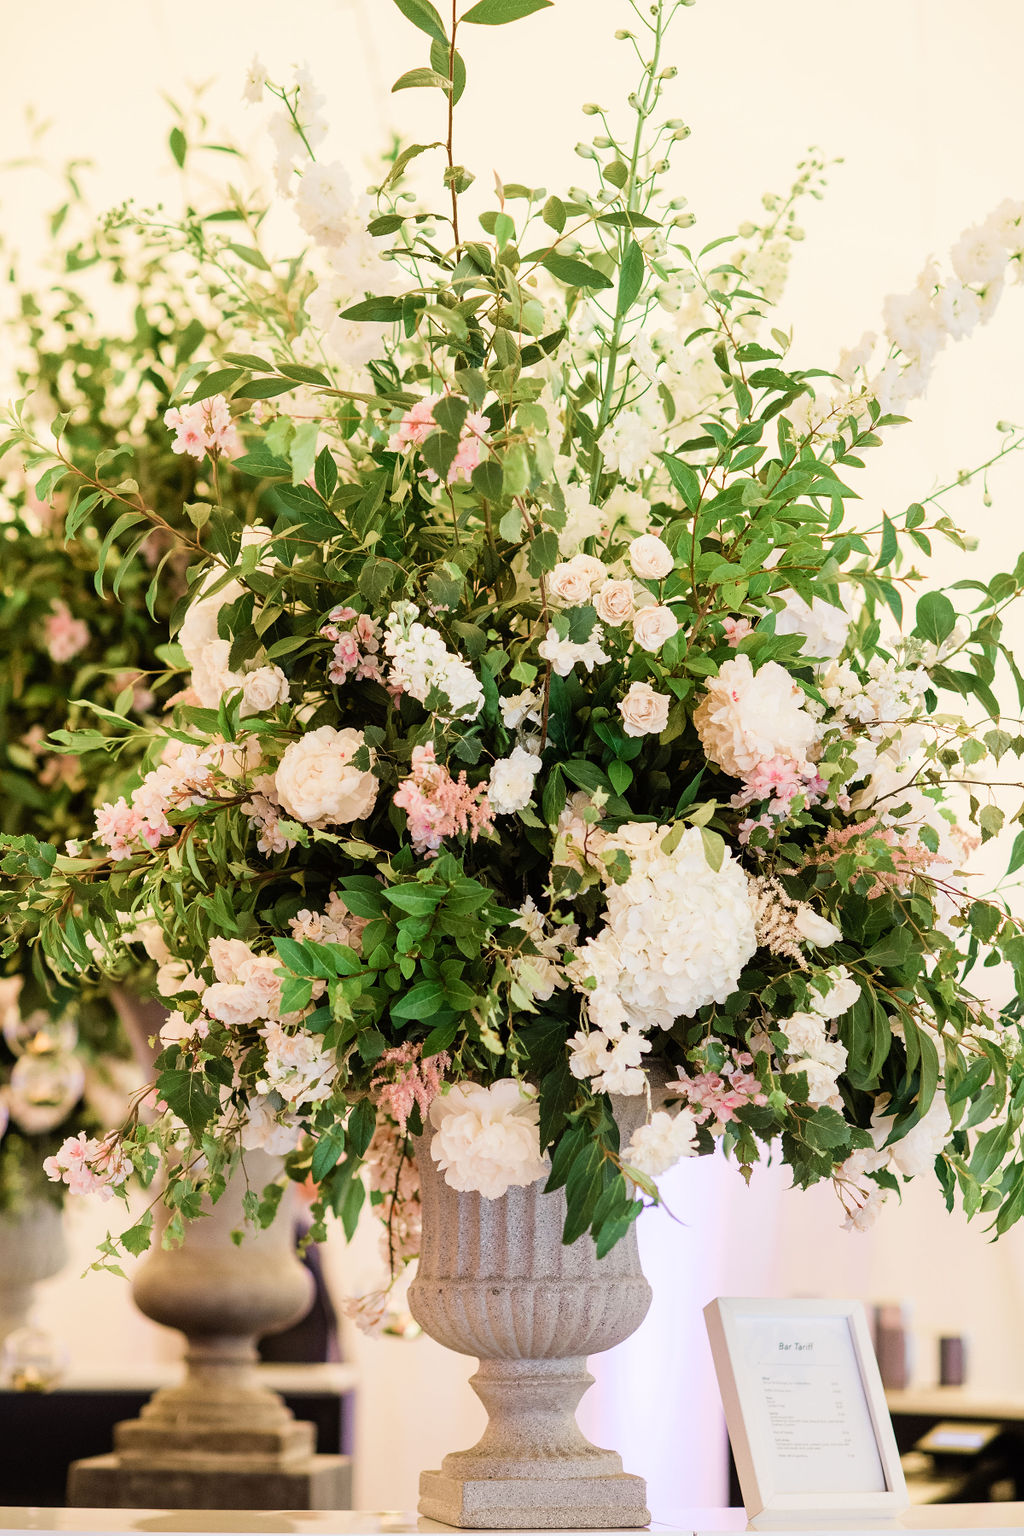 British florals at Chiswick House wedding, London | Sugar Plum Bakes